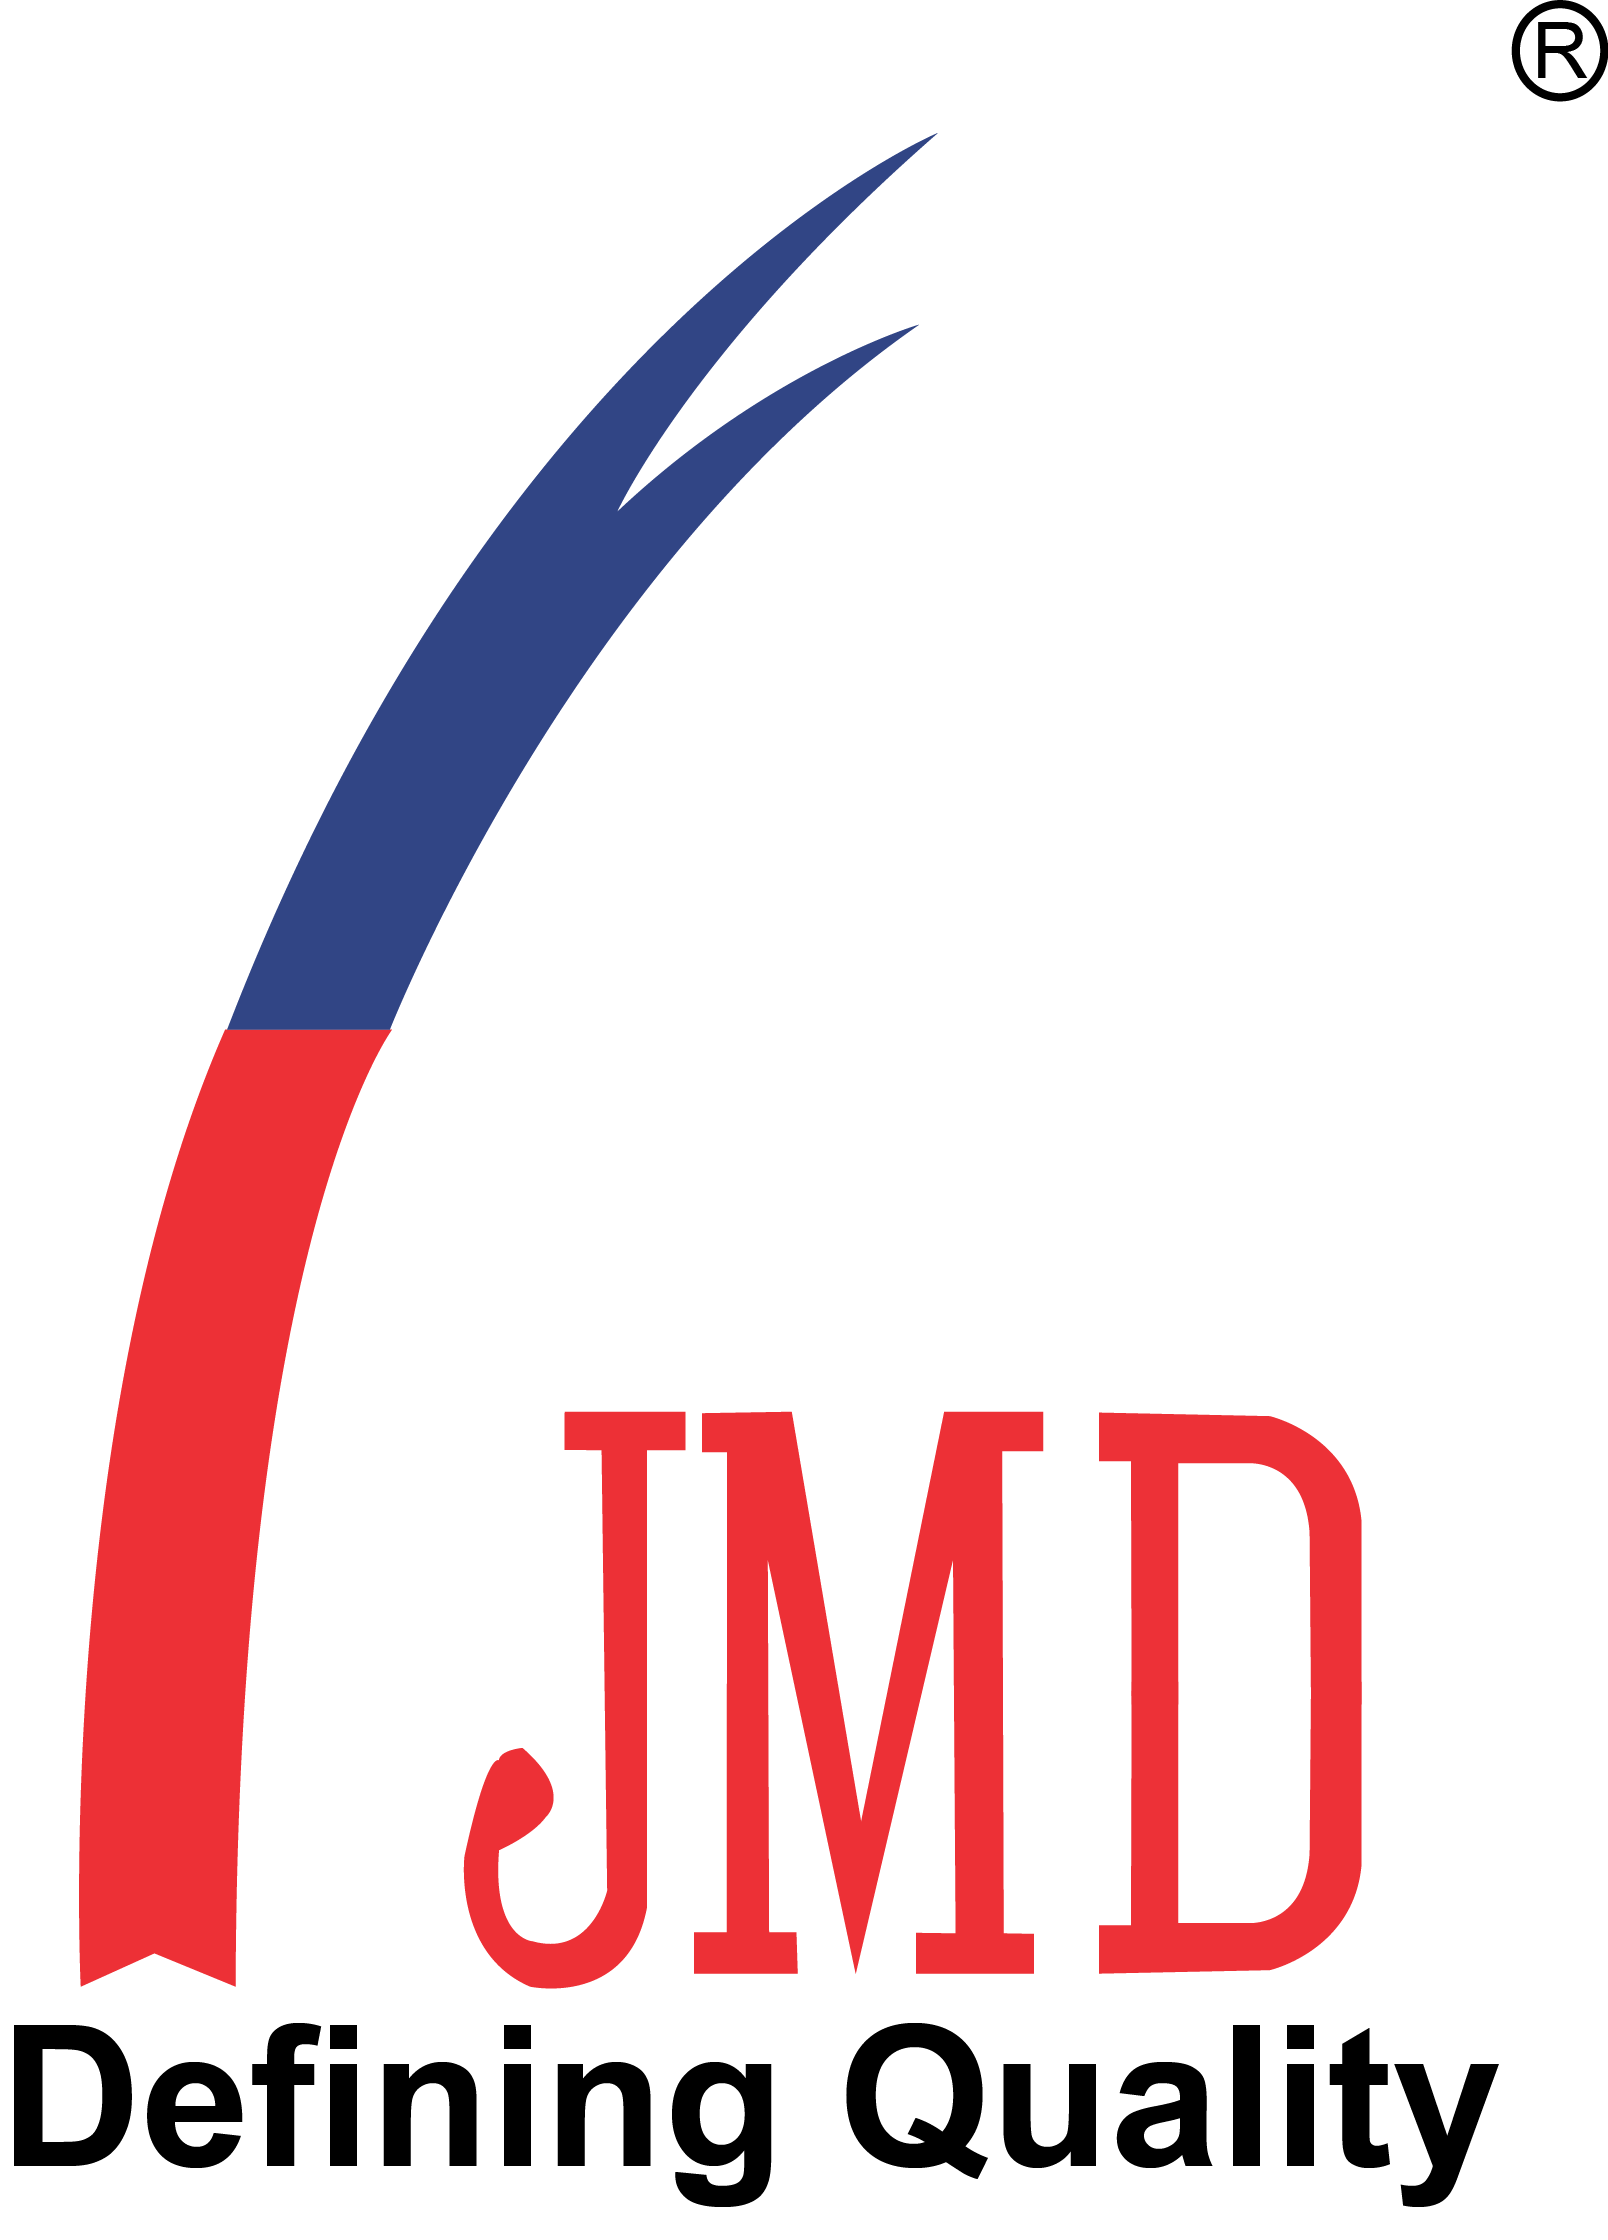 JMD